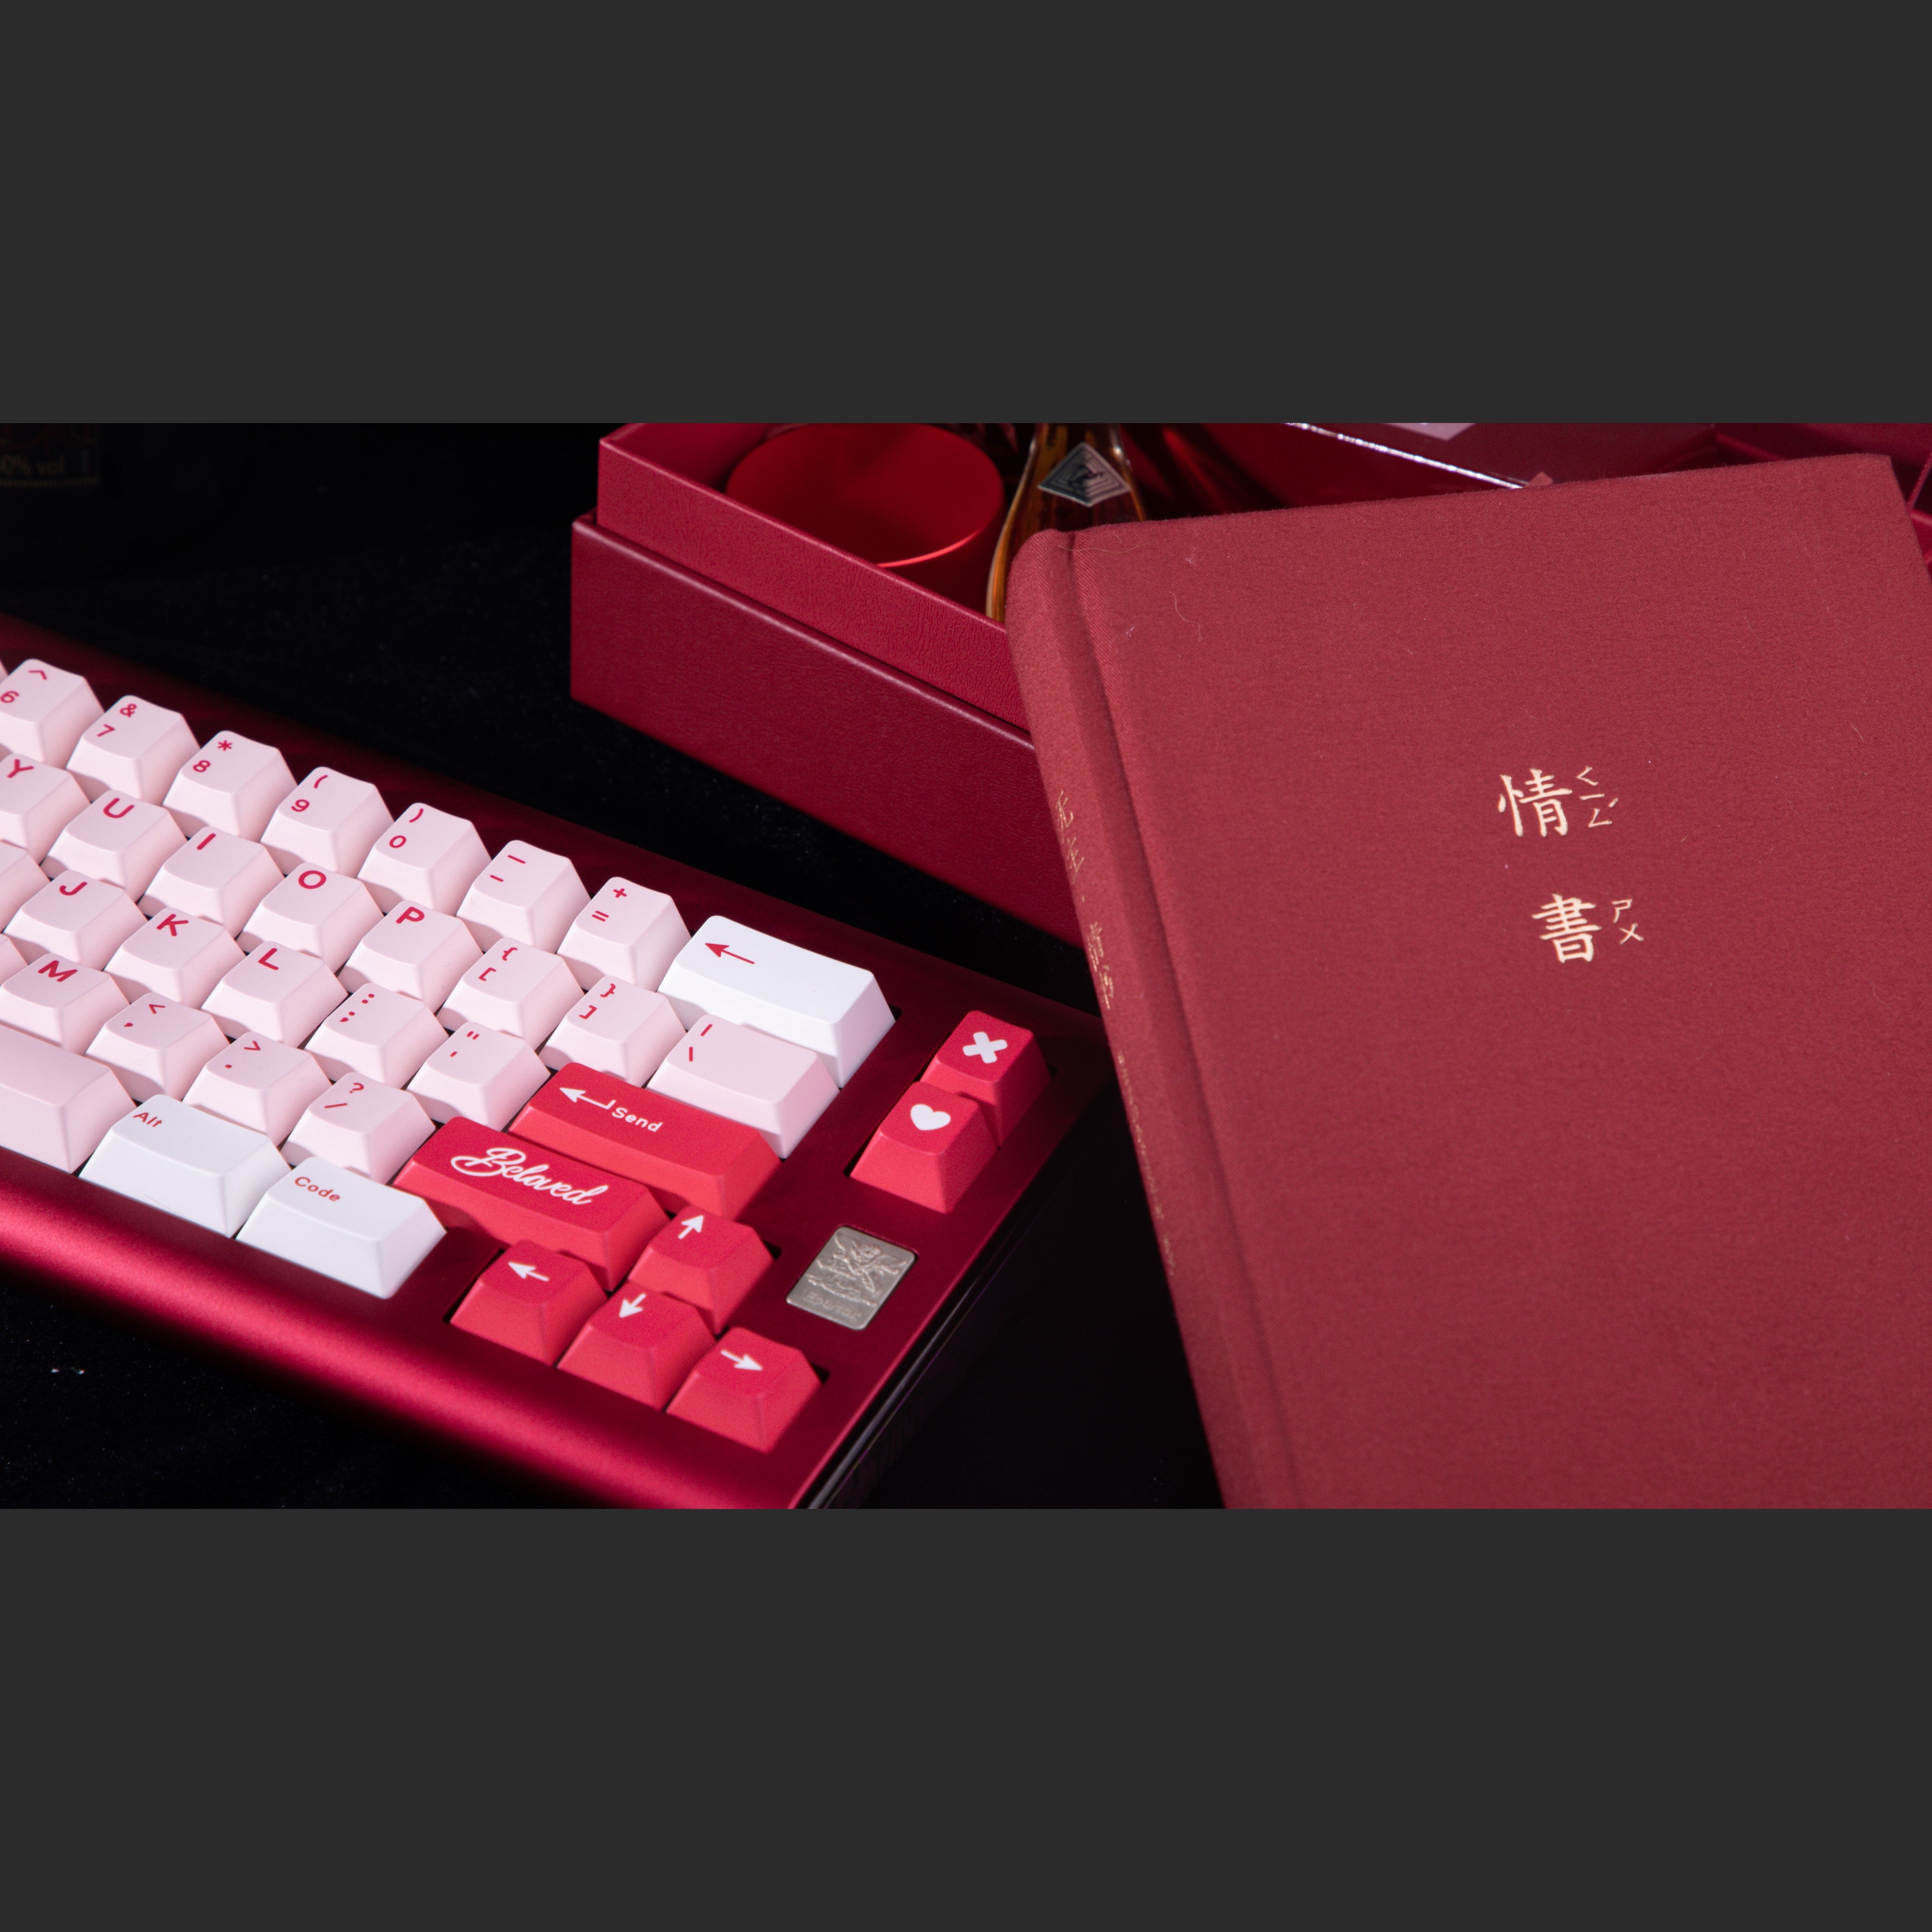 Cupid65 Keyboard Kit